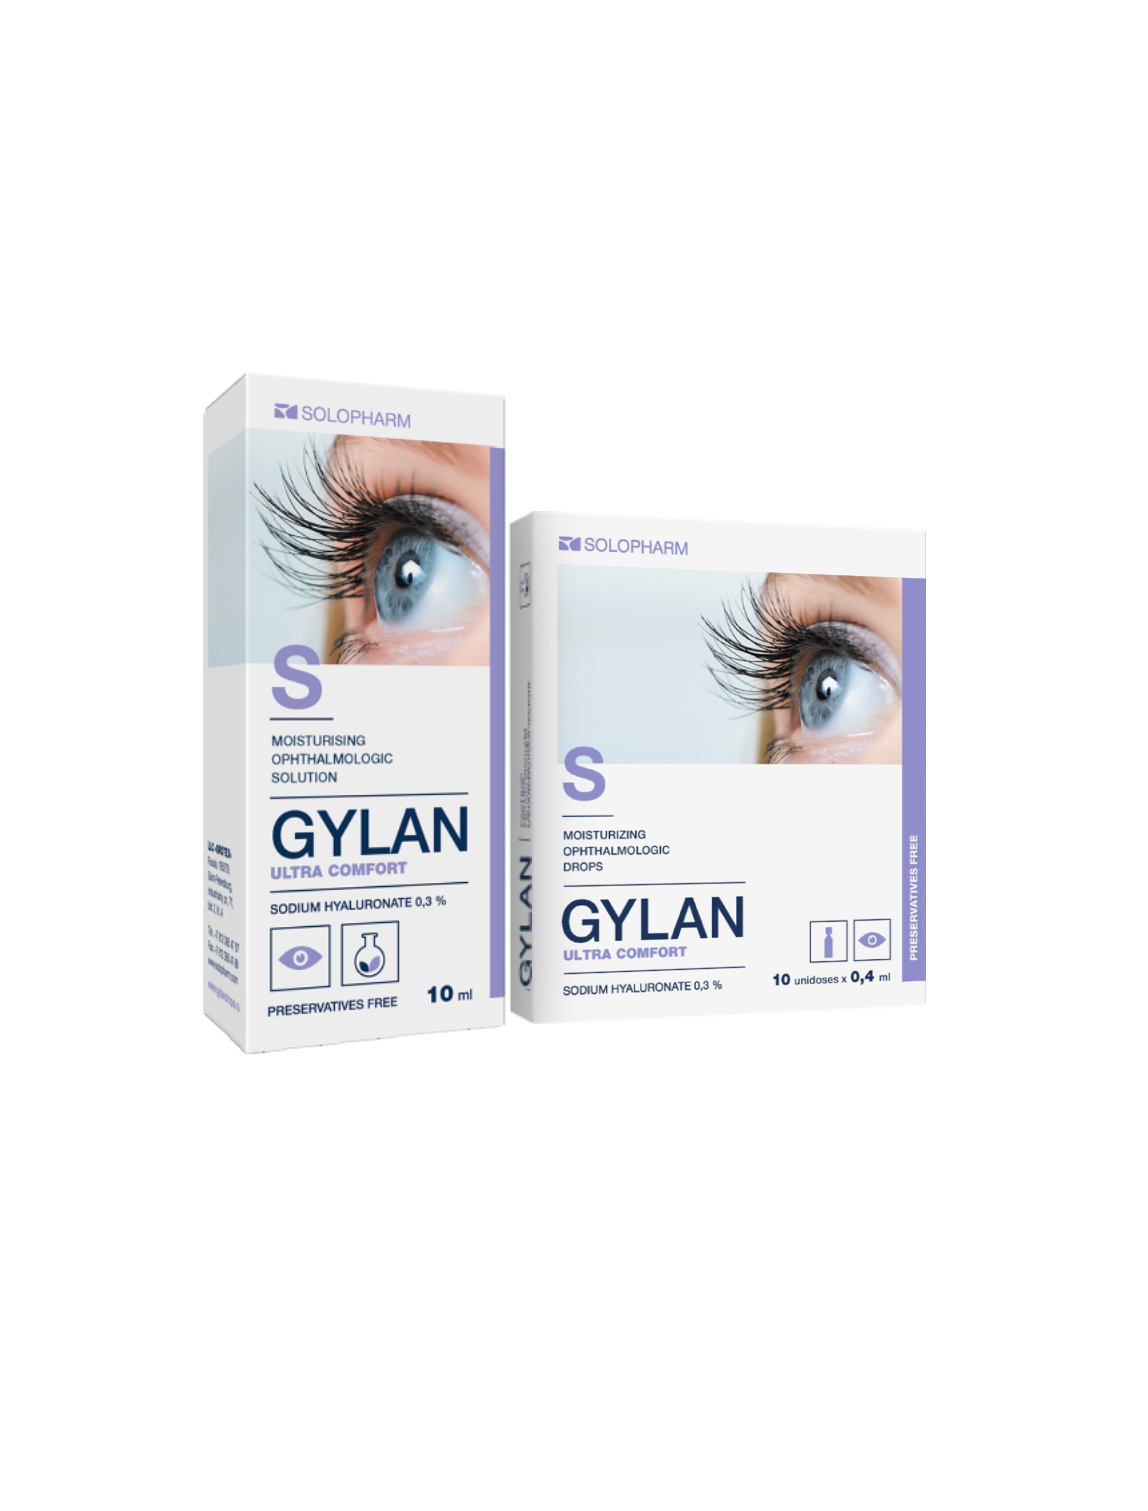 Gylan Ultra Comfort Moisturizing Eye Drops: Product Instructions | Gylan